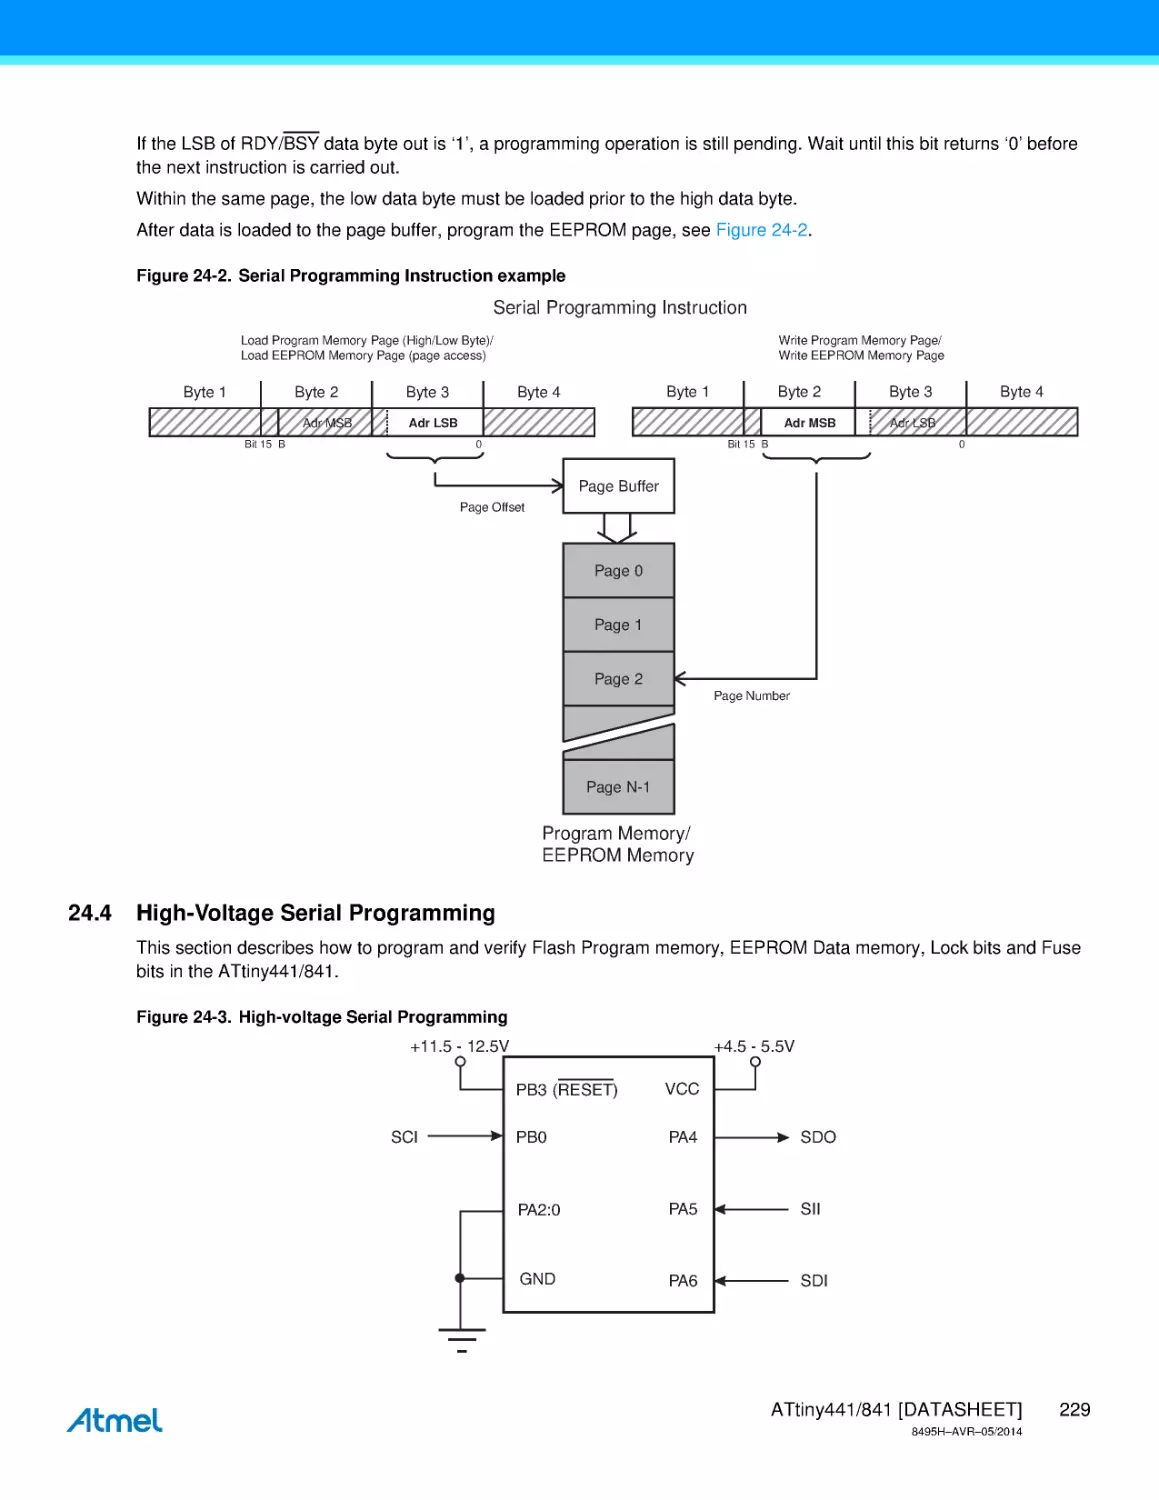 24.4 High-Voltage Serial Programming